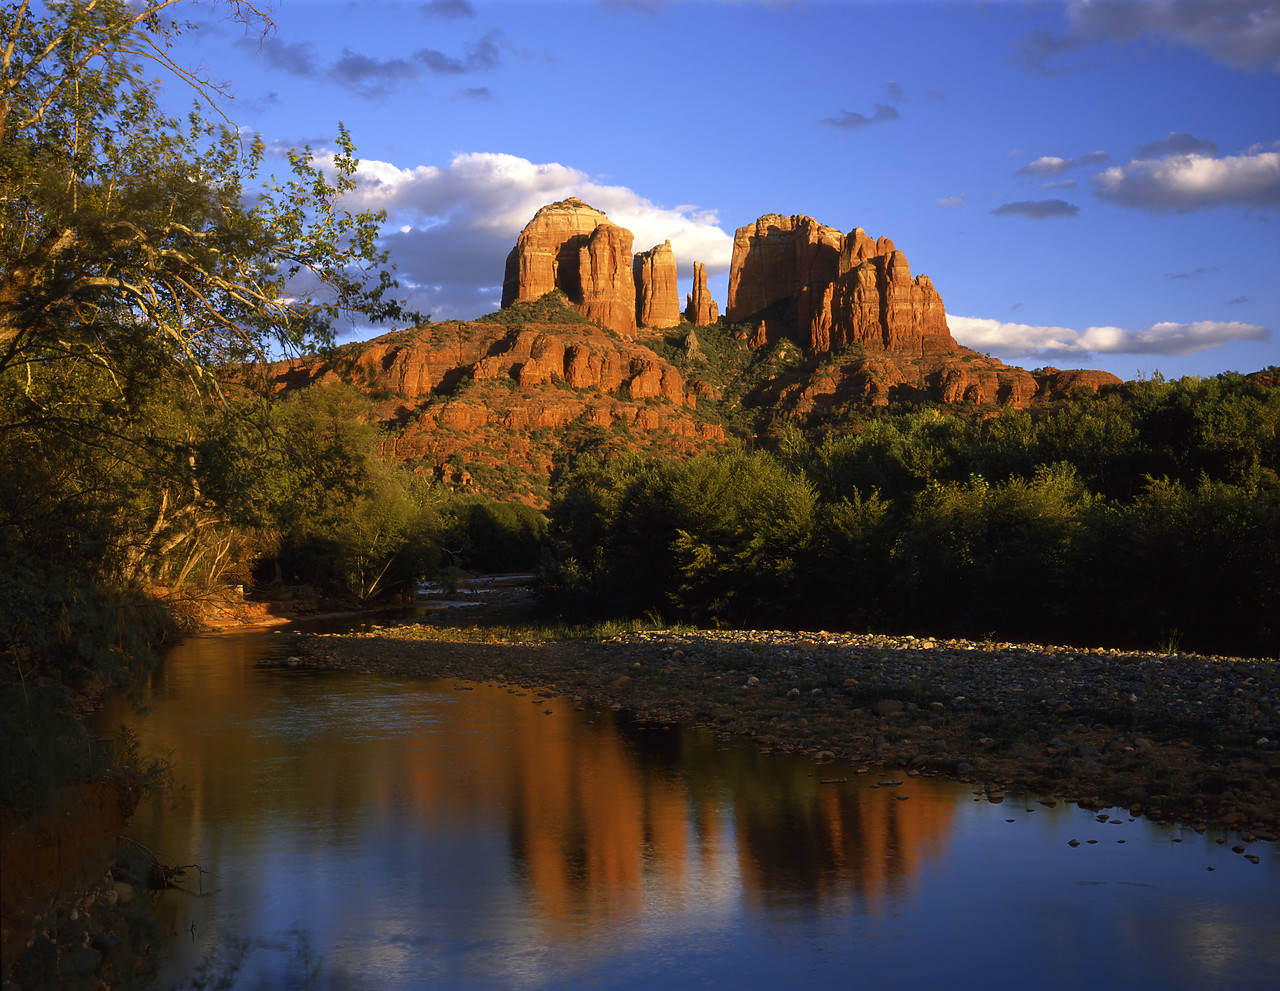 #955829-1 - Cathedral Rock at Sunset, Sedona, Arizona, USA